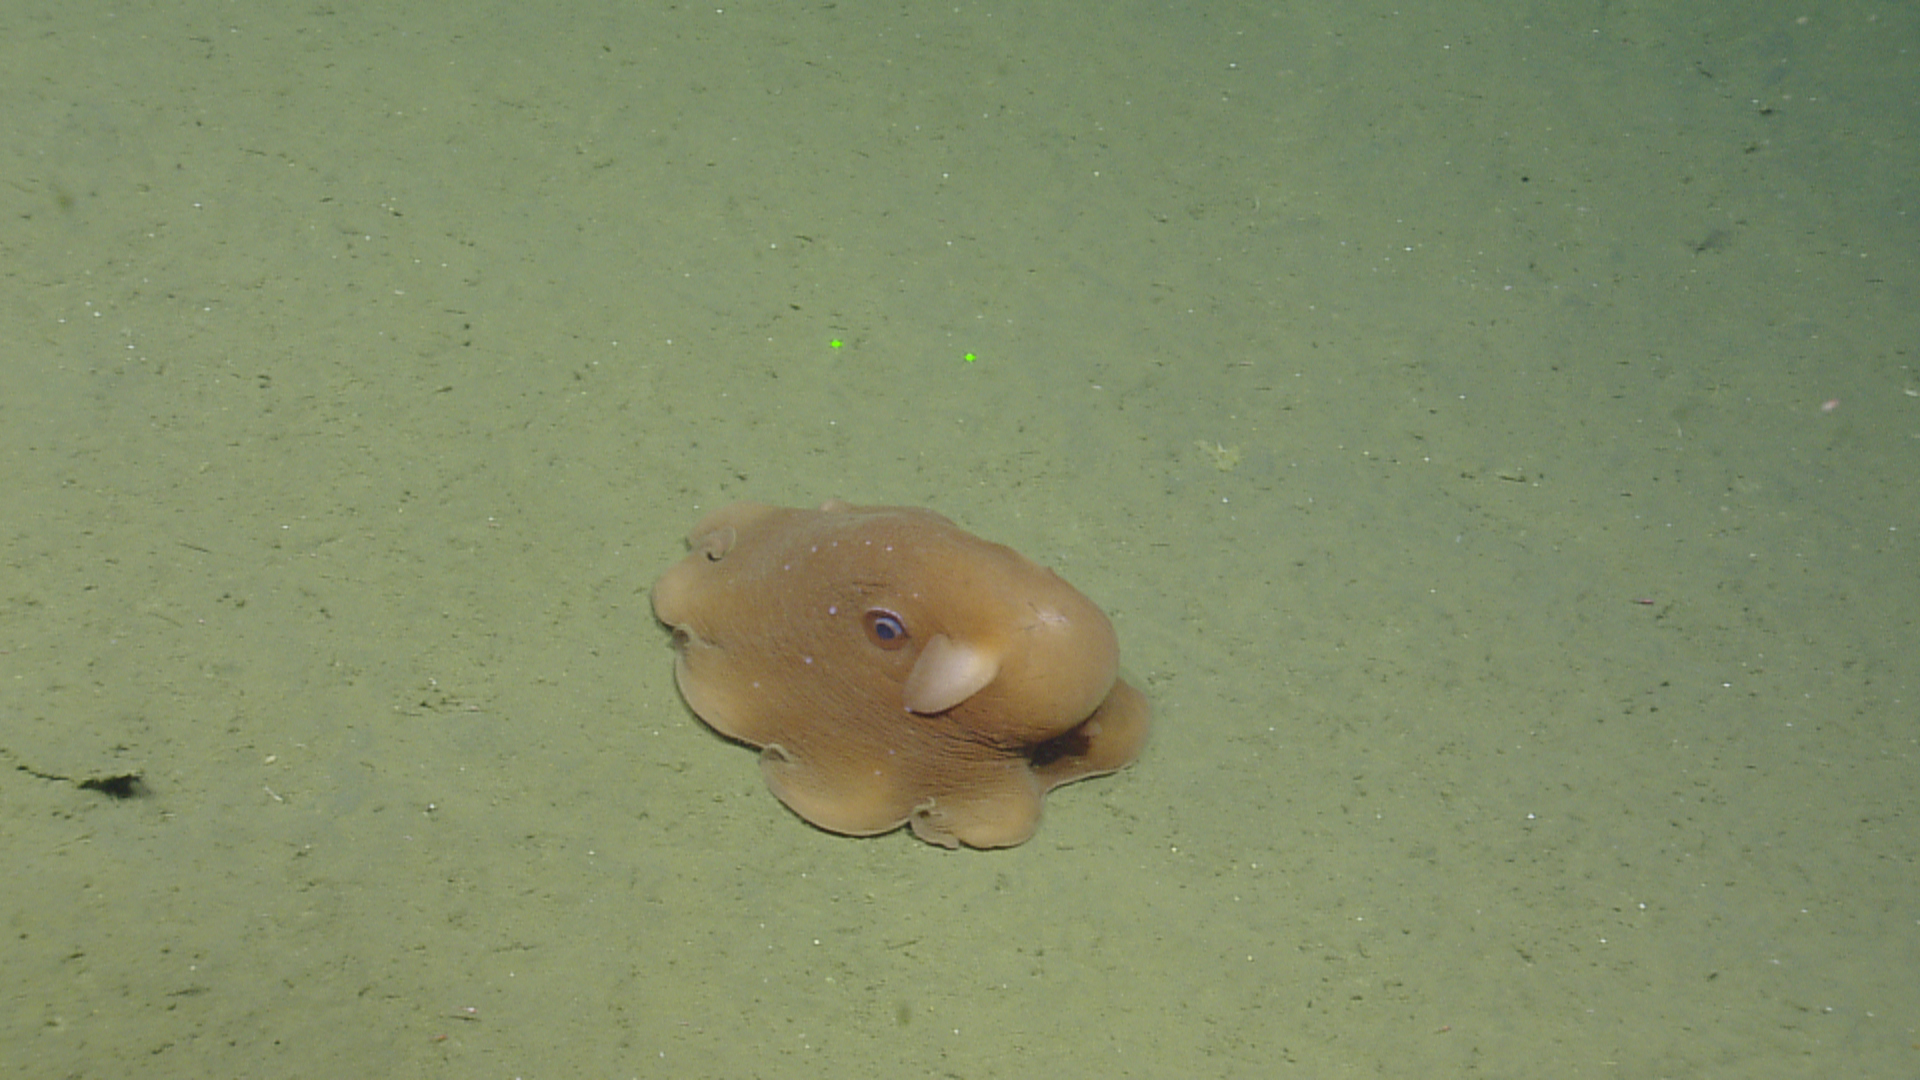 Octopus seen on the se floor. The seafloor looks silty and beige.